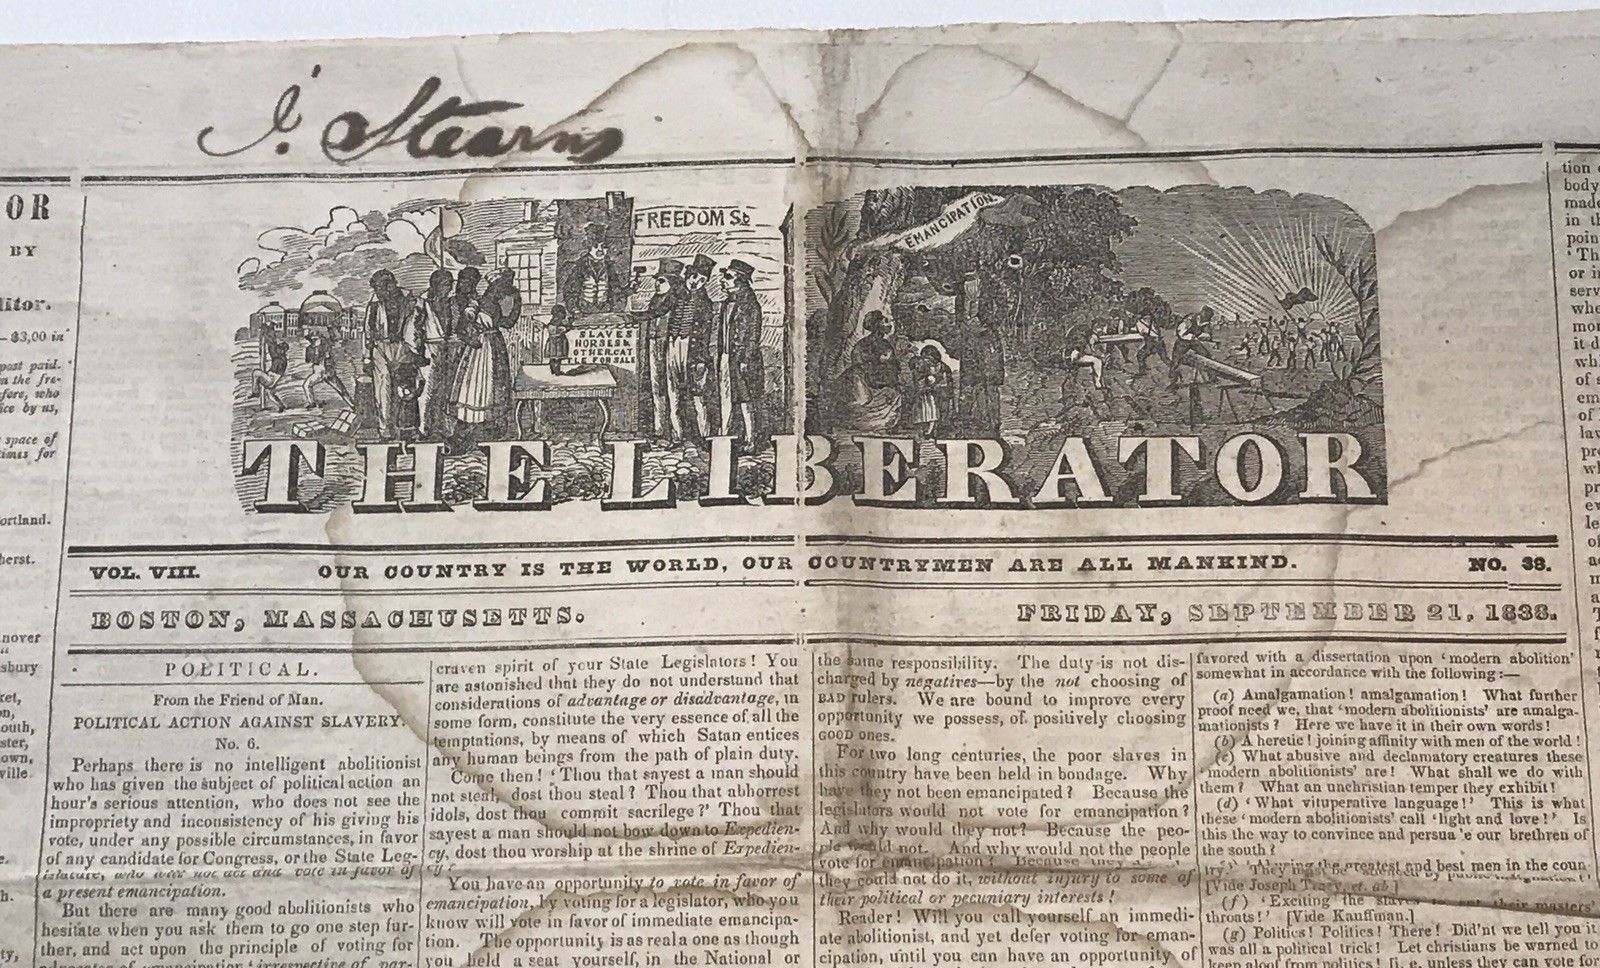 LIberator, abolitionist newspaper, 1838